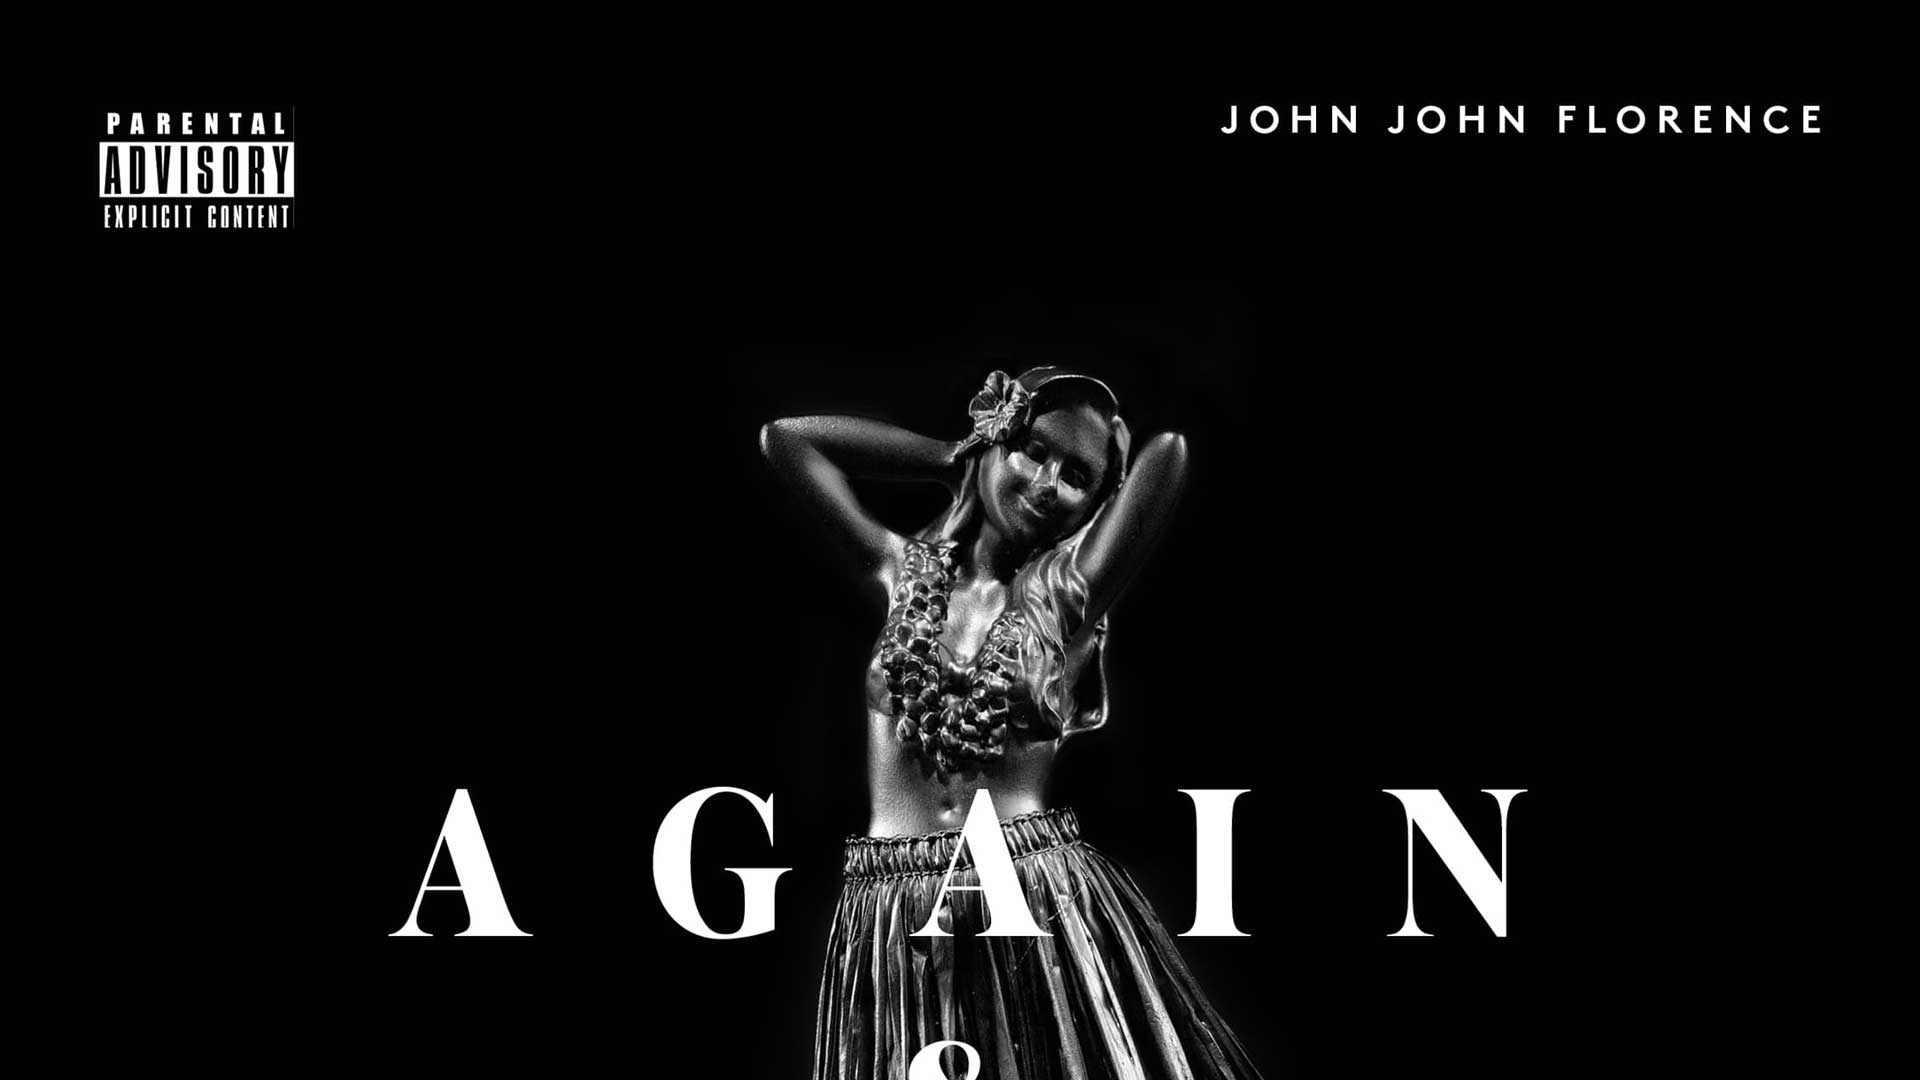 John John Florence — “Again”